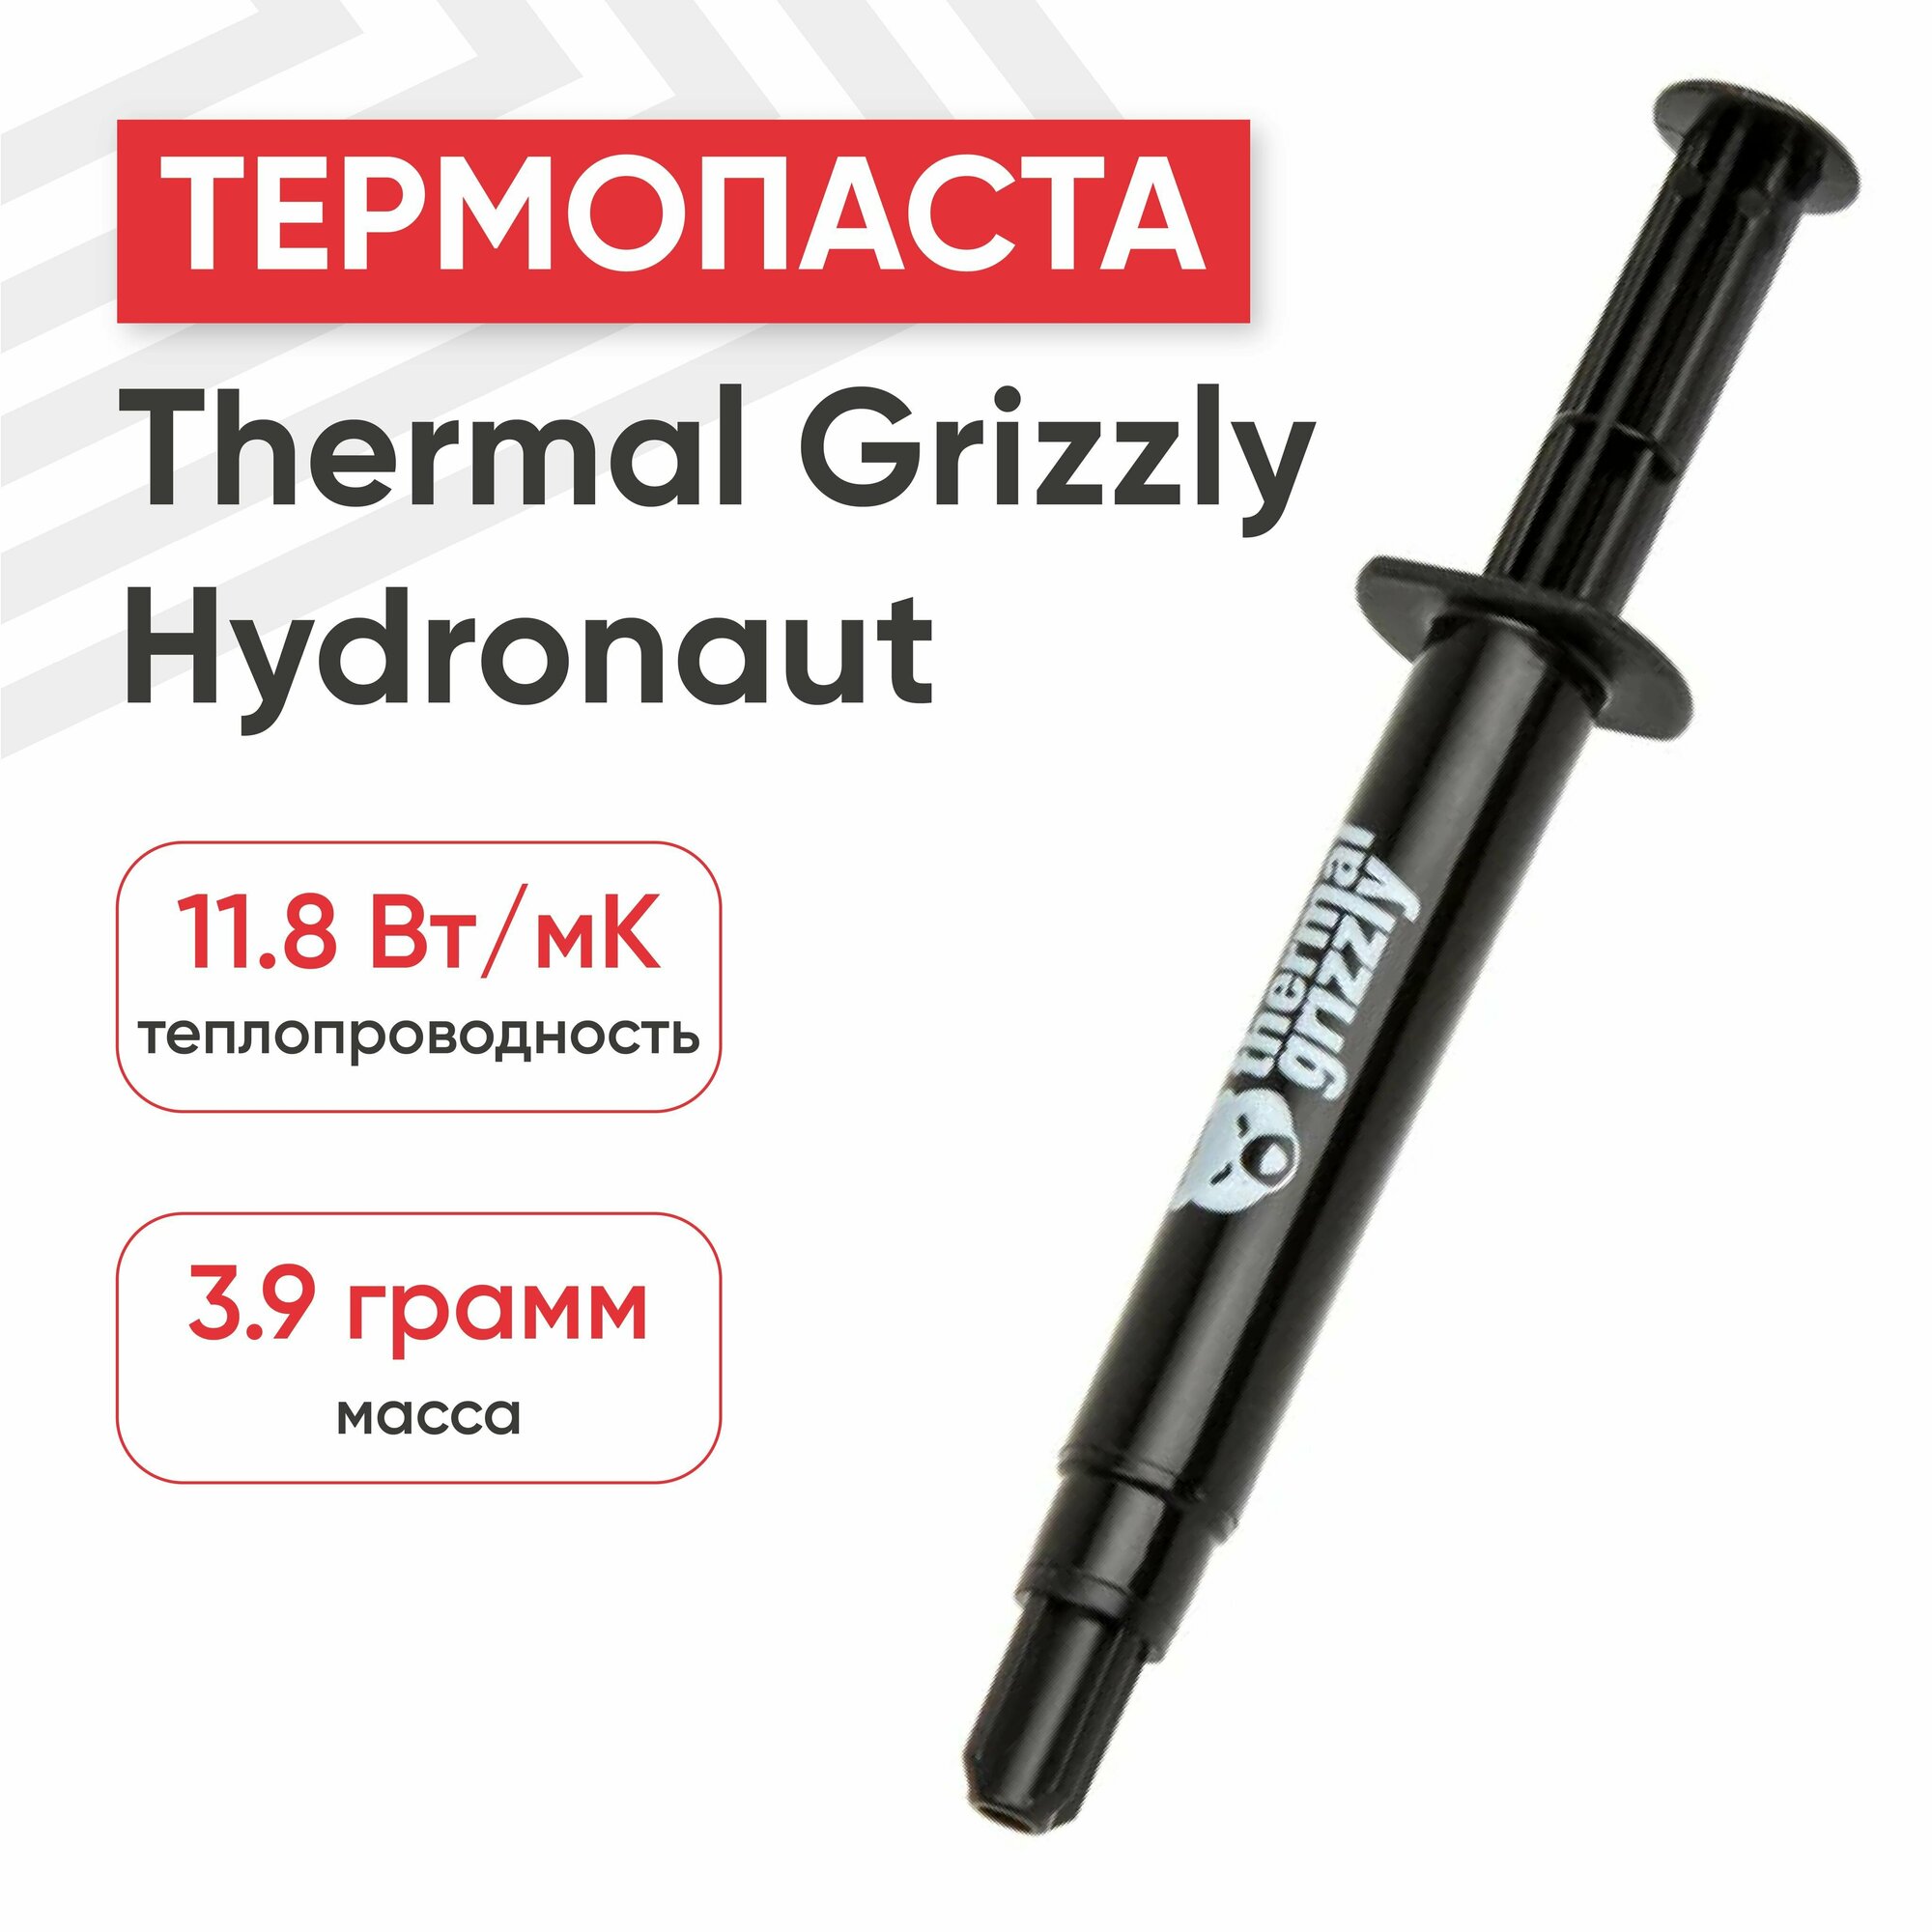 Термопаста Thermal Grizzly Hydronaut - 39 г/15мл